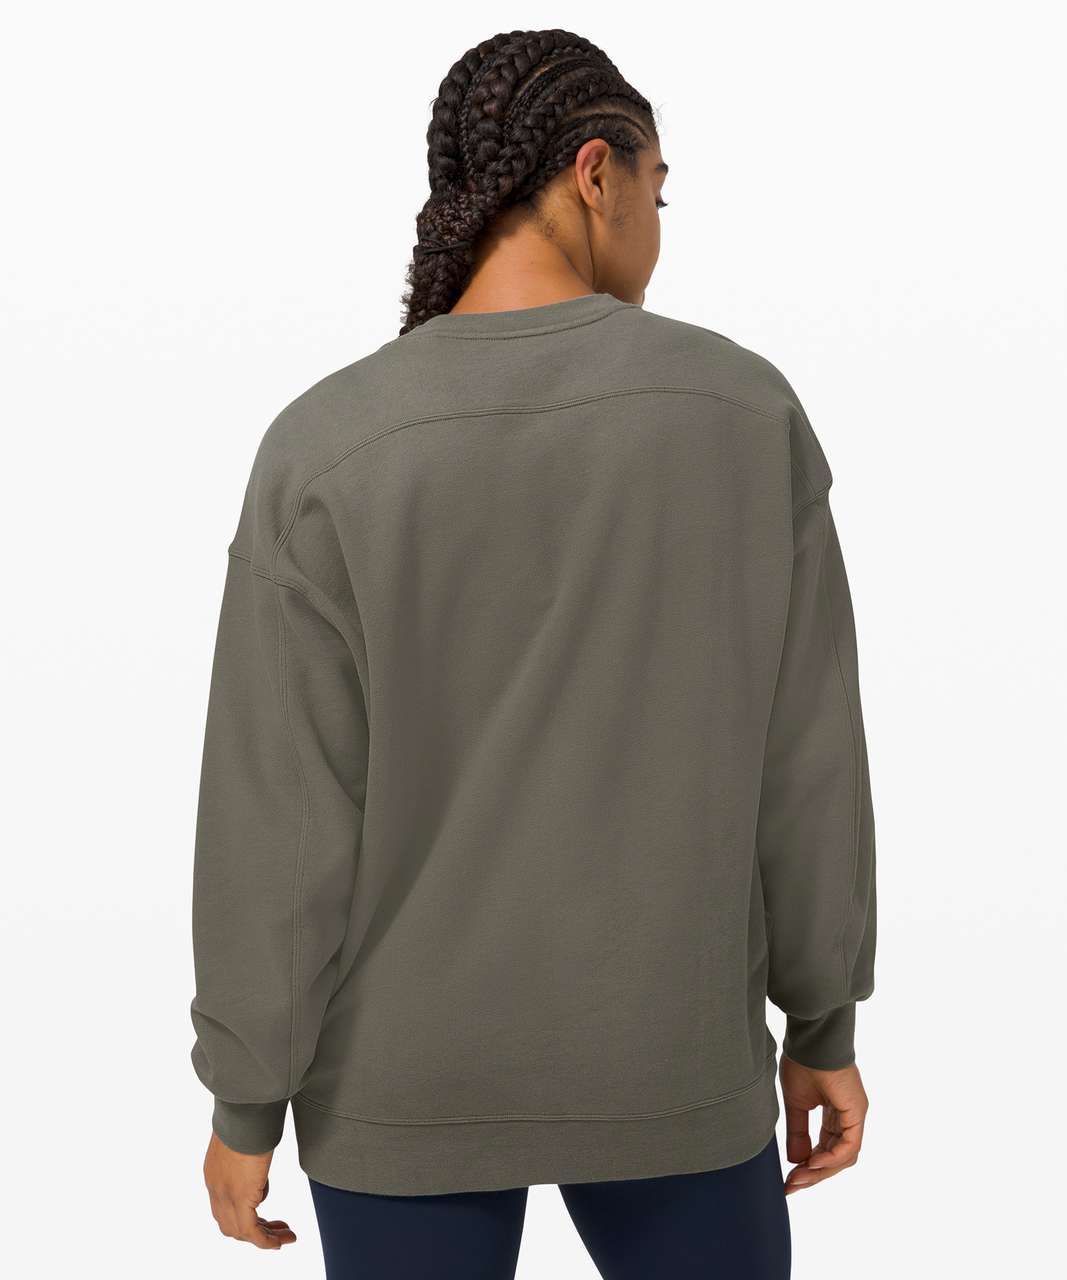 Lululemon Sweatshirt Turtleneck Gray Size 8 - $45 - From Paige